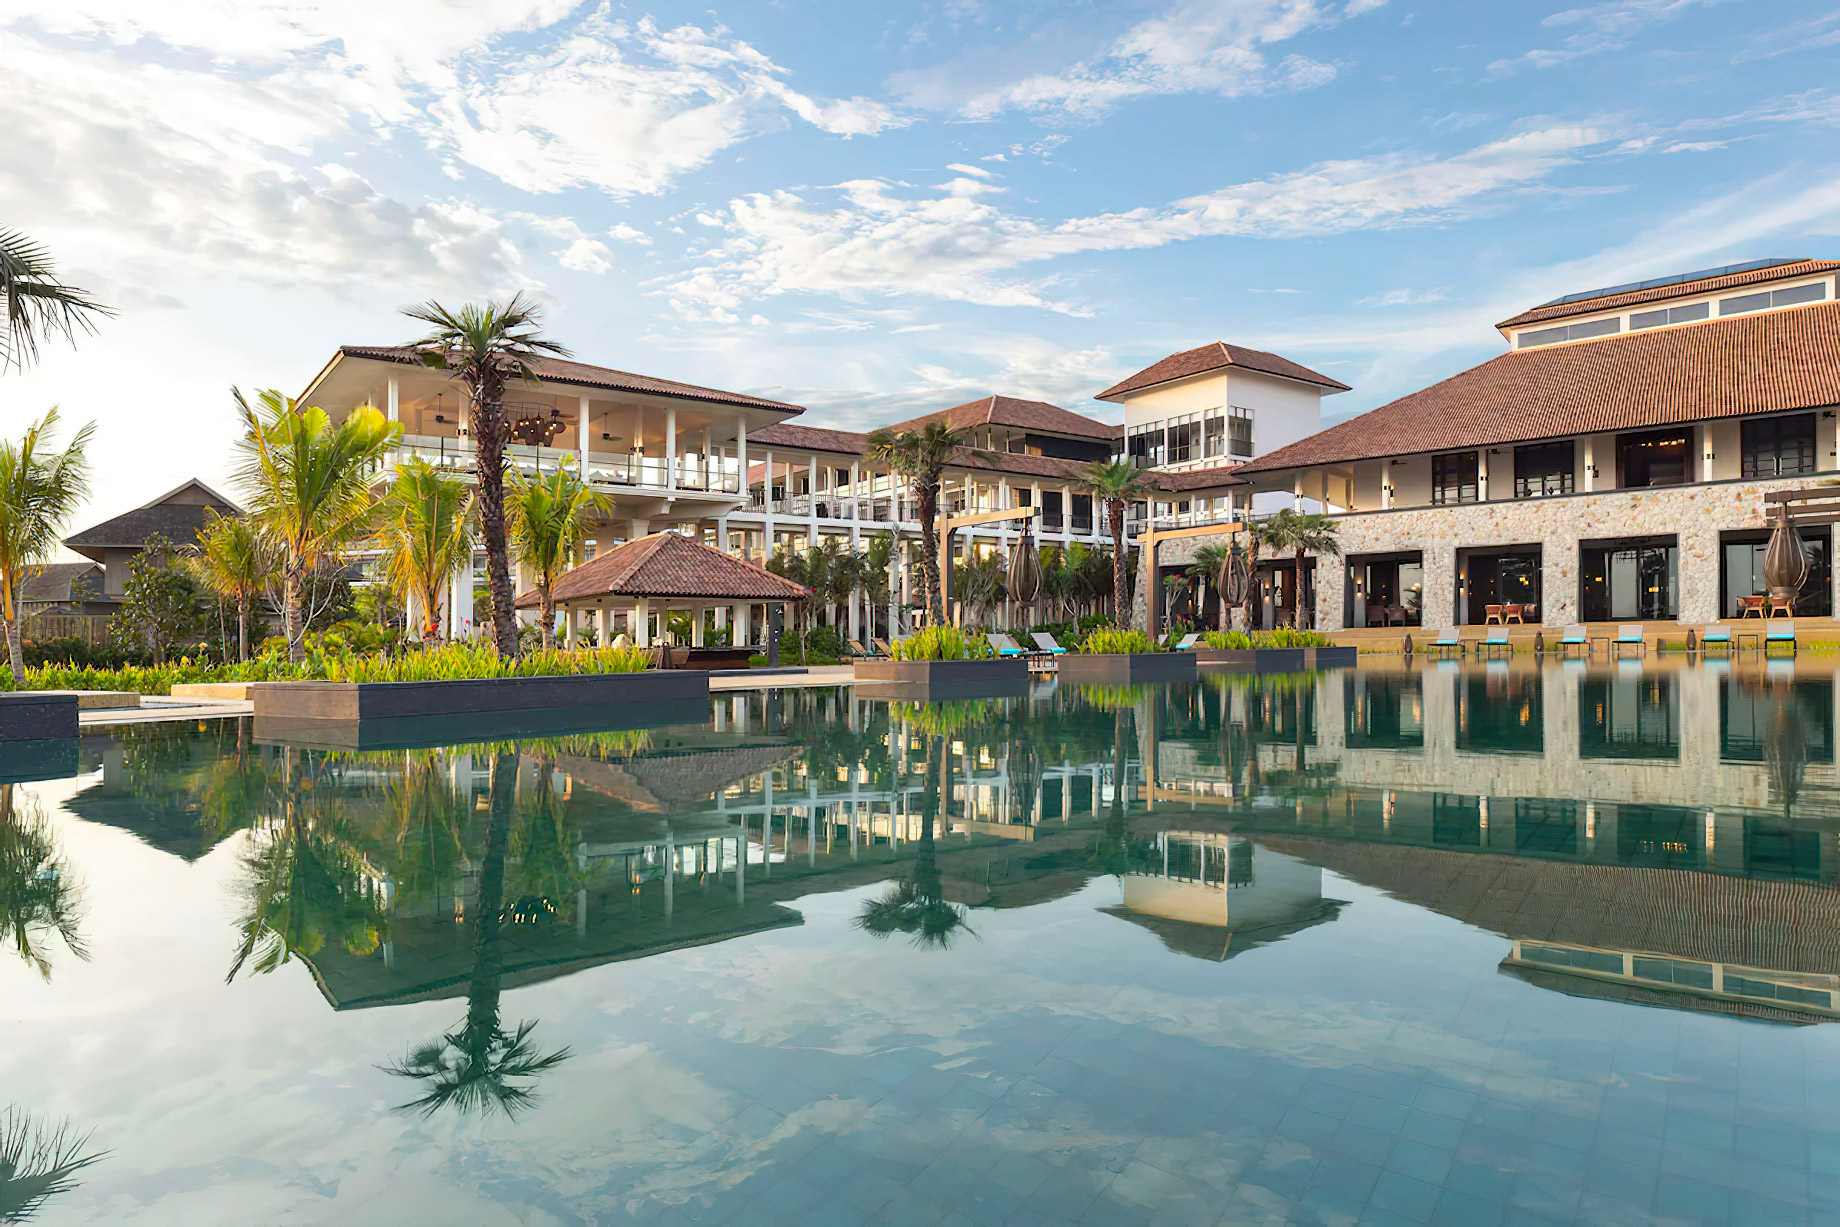 Anantara Desaru Coast Resort & Villas – Johor, Malaysia – Exterior Pool View